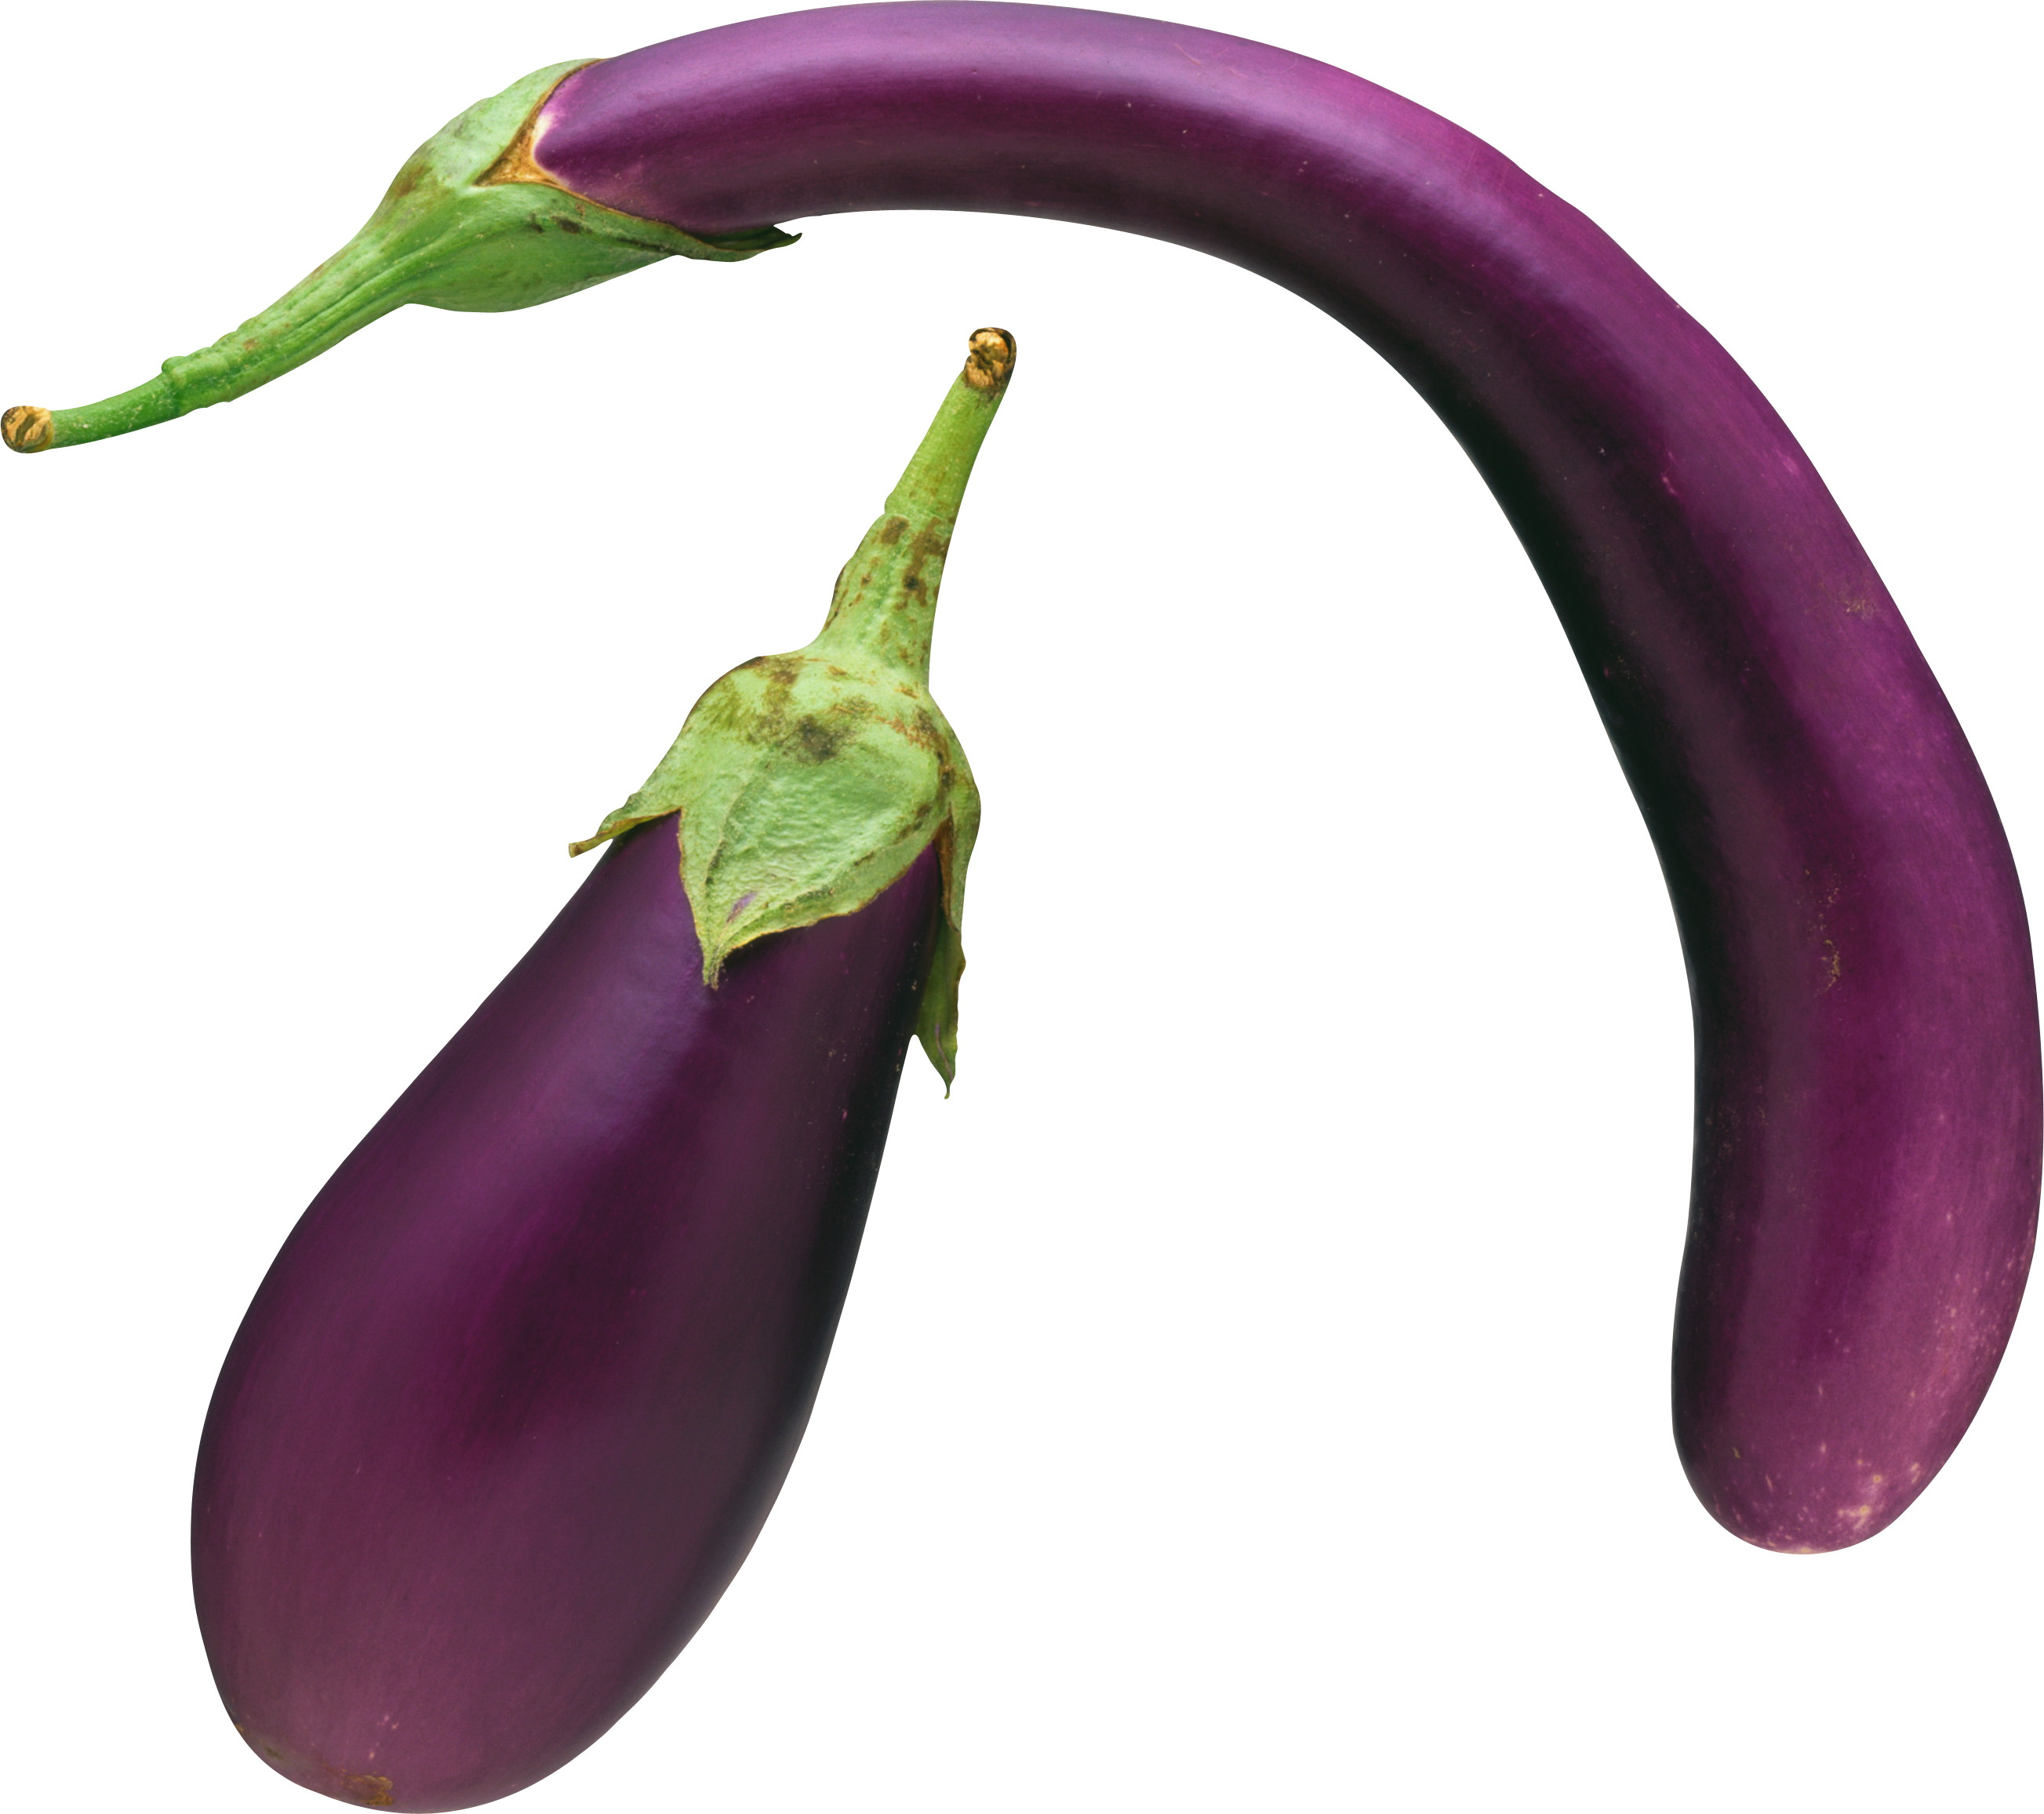 Download PNG image: Eggplant PNG images free download